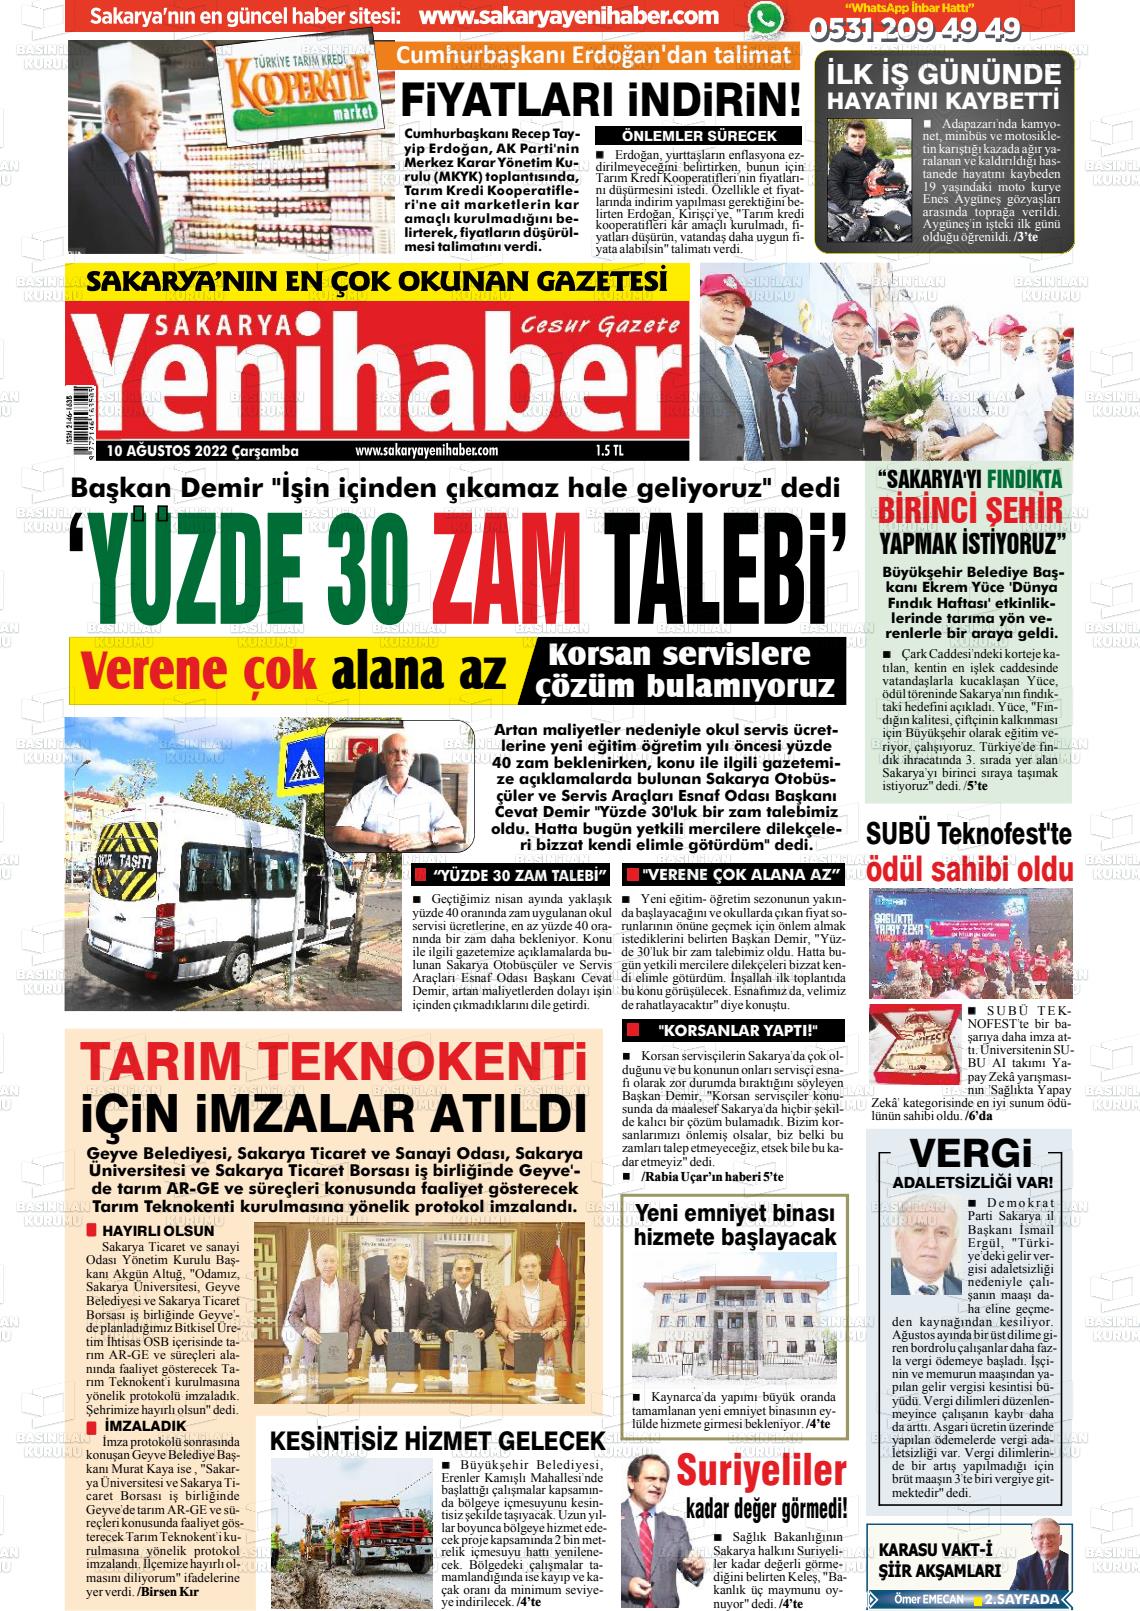 10 Ağustos 2022 Sakarya Yeni Haber Gazete Manşeti